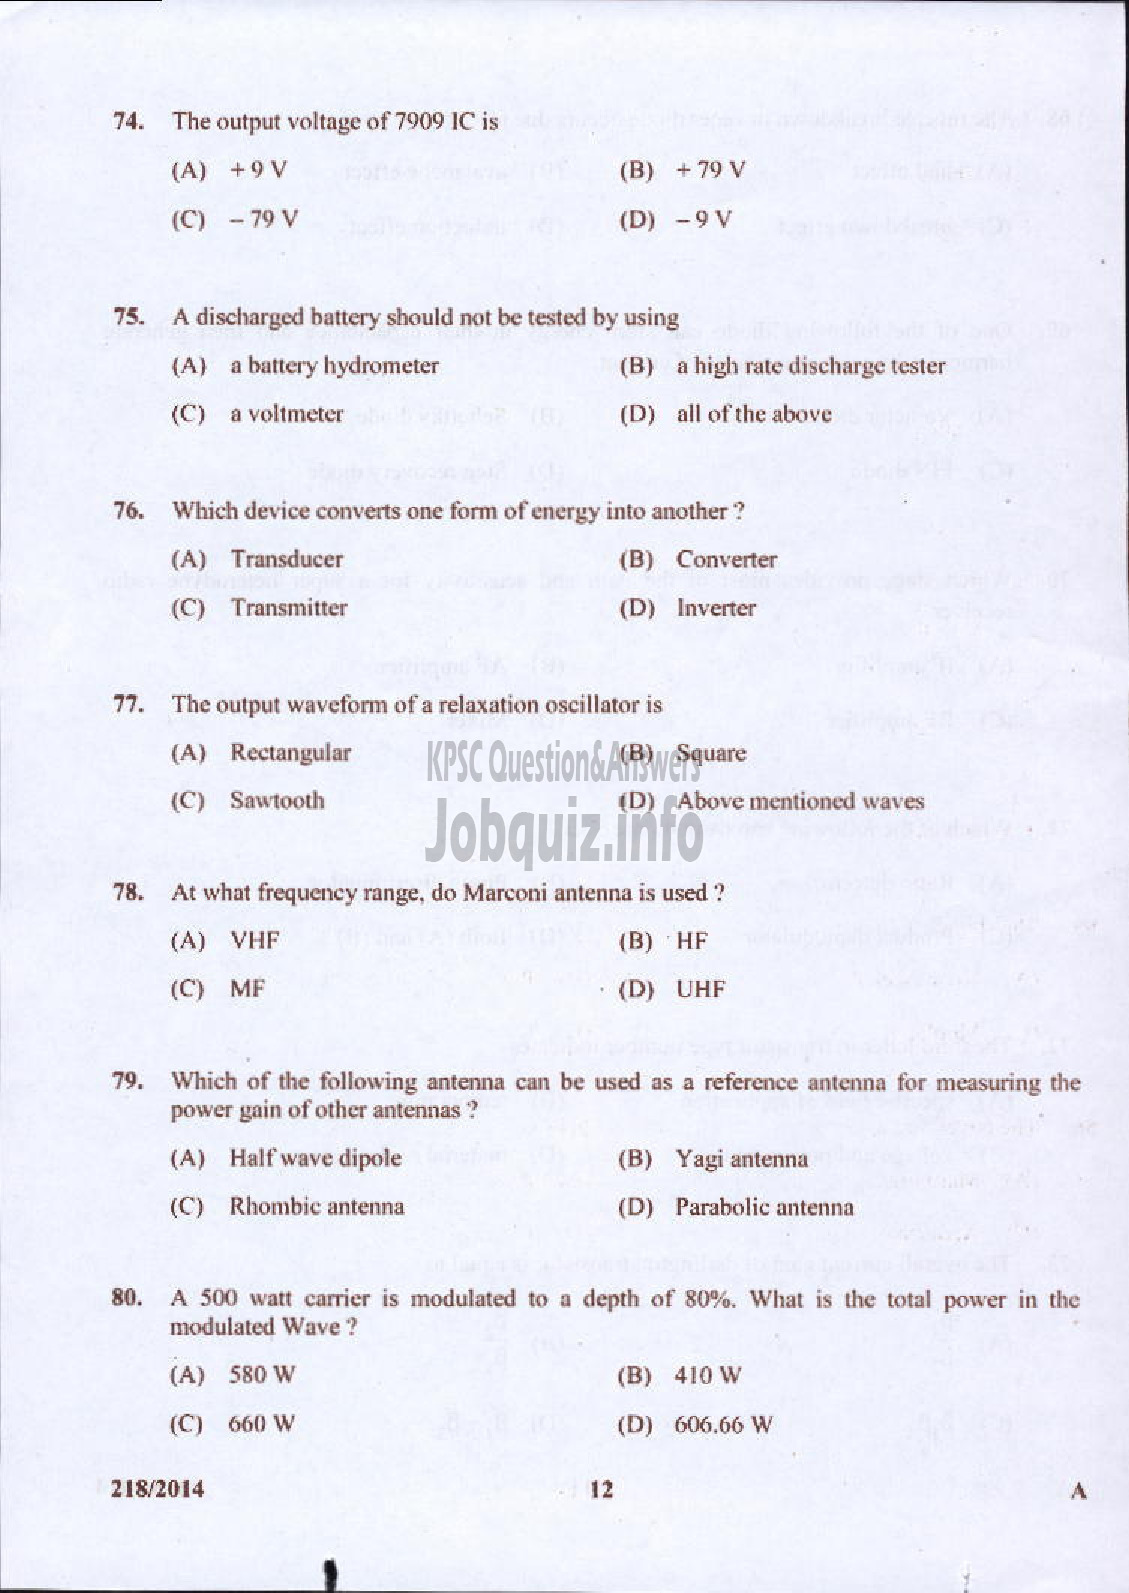 Kerala PSC Question Paper - LABORATORY TECHNICAL ASSISTANT MRRTV VHSE-12